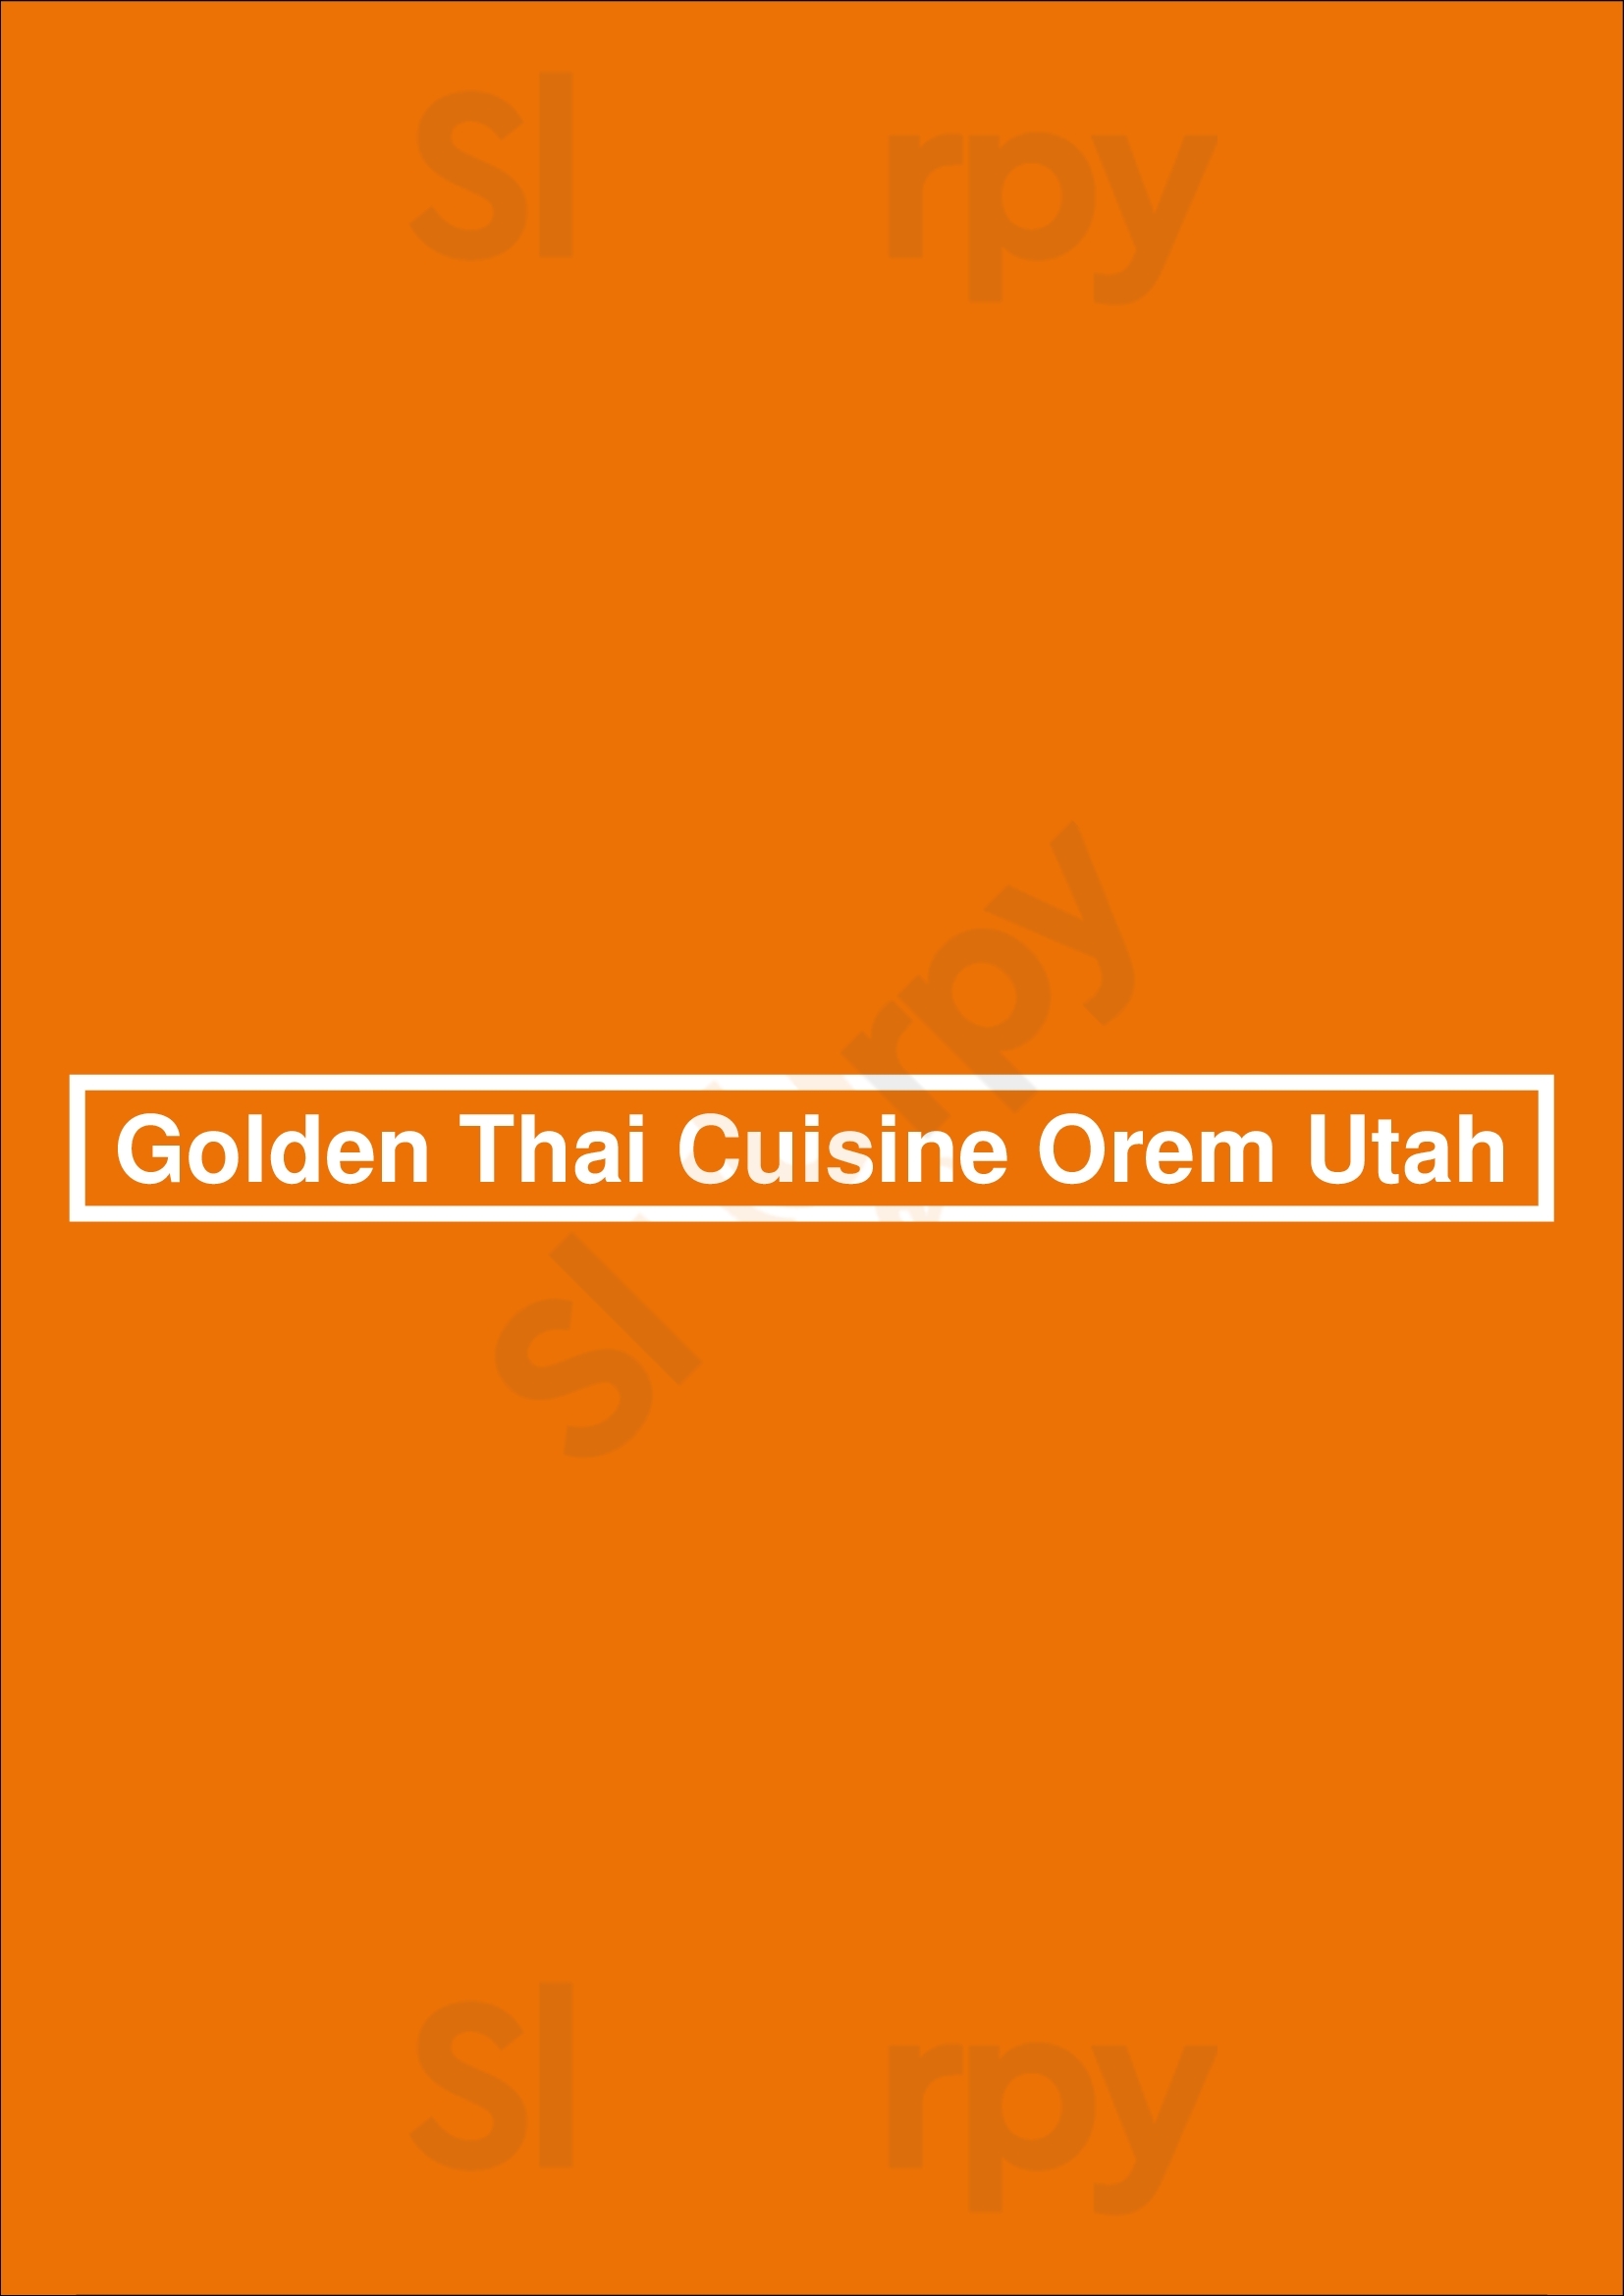 Golden Thai Cuisine Orem Utah Orem Menu - 1